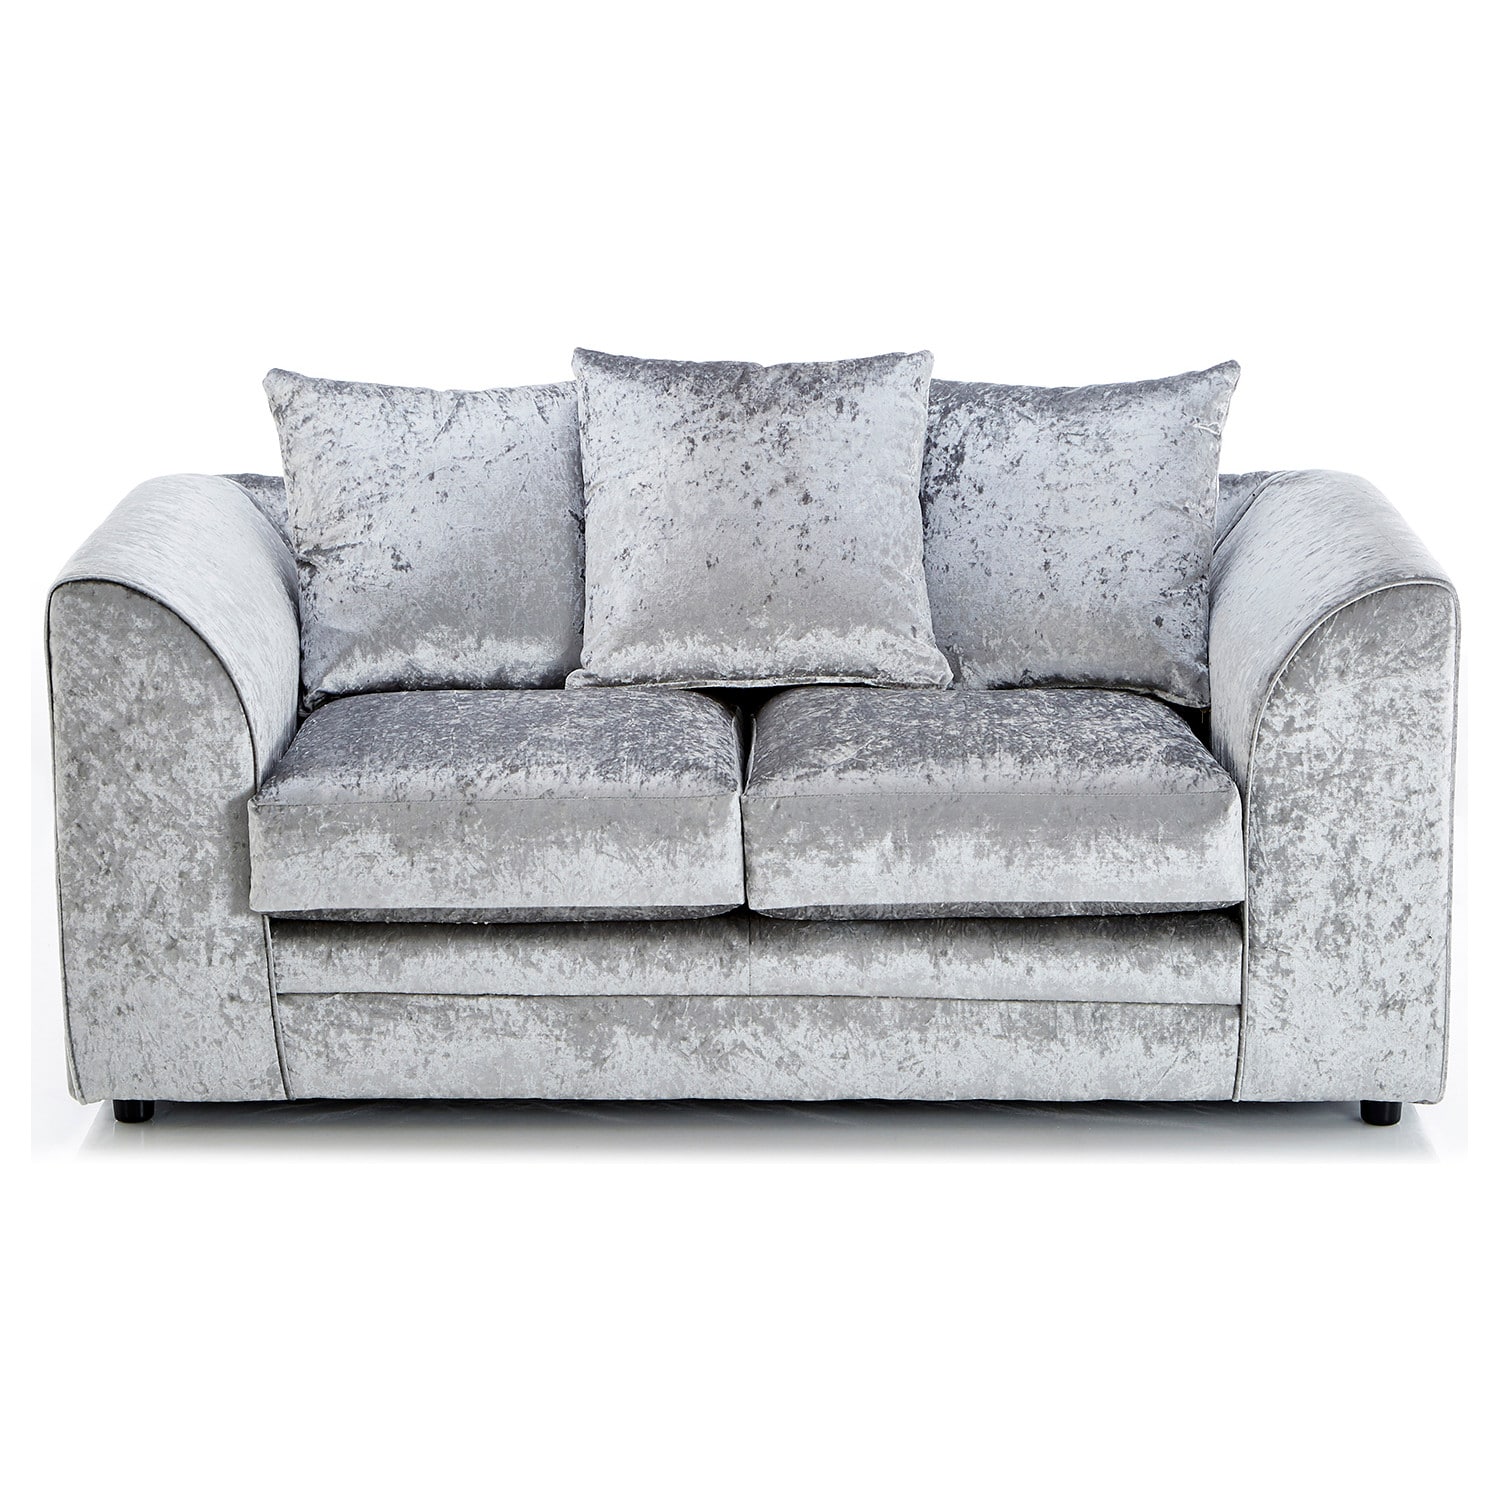 Michigan Crushed Velvet Sofa Silver / Grey 2 Seater